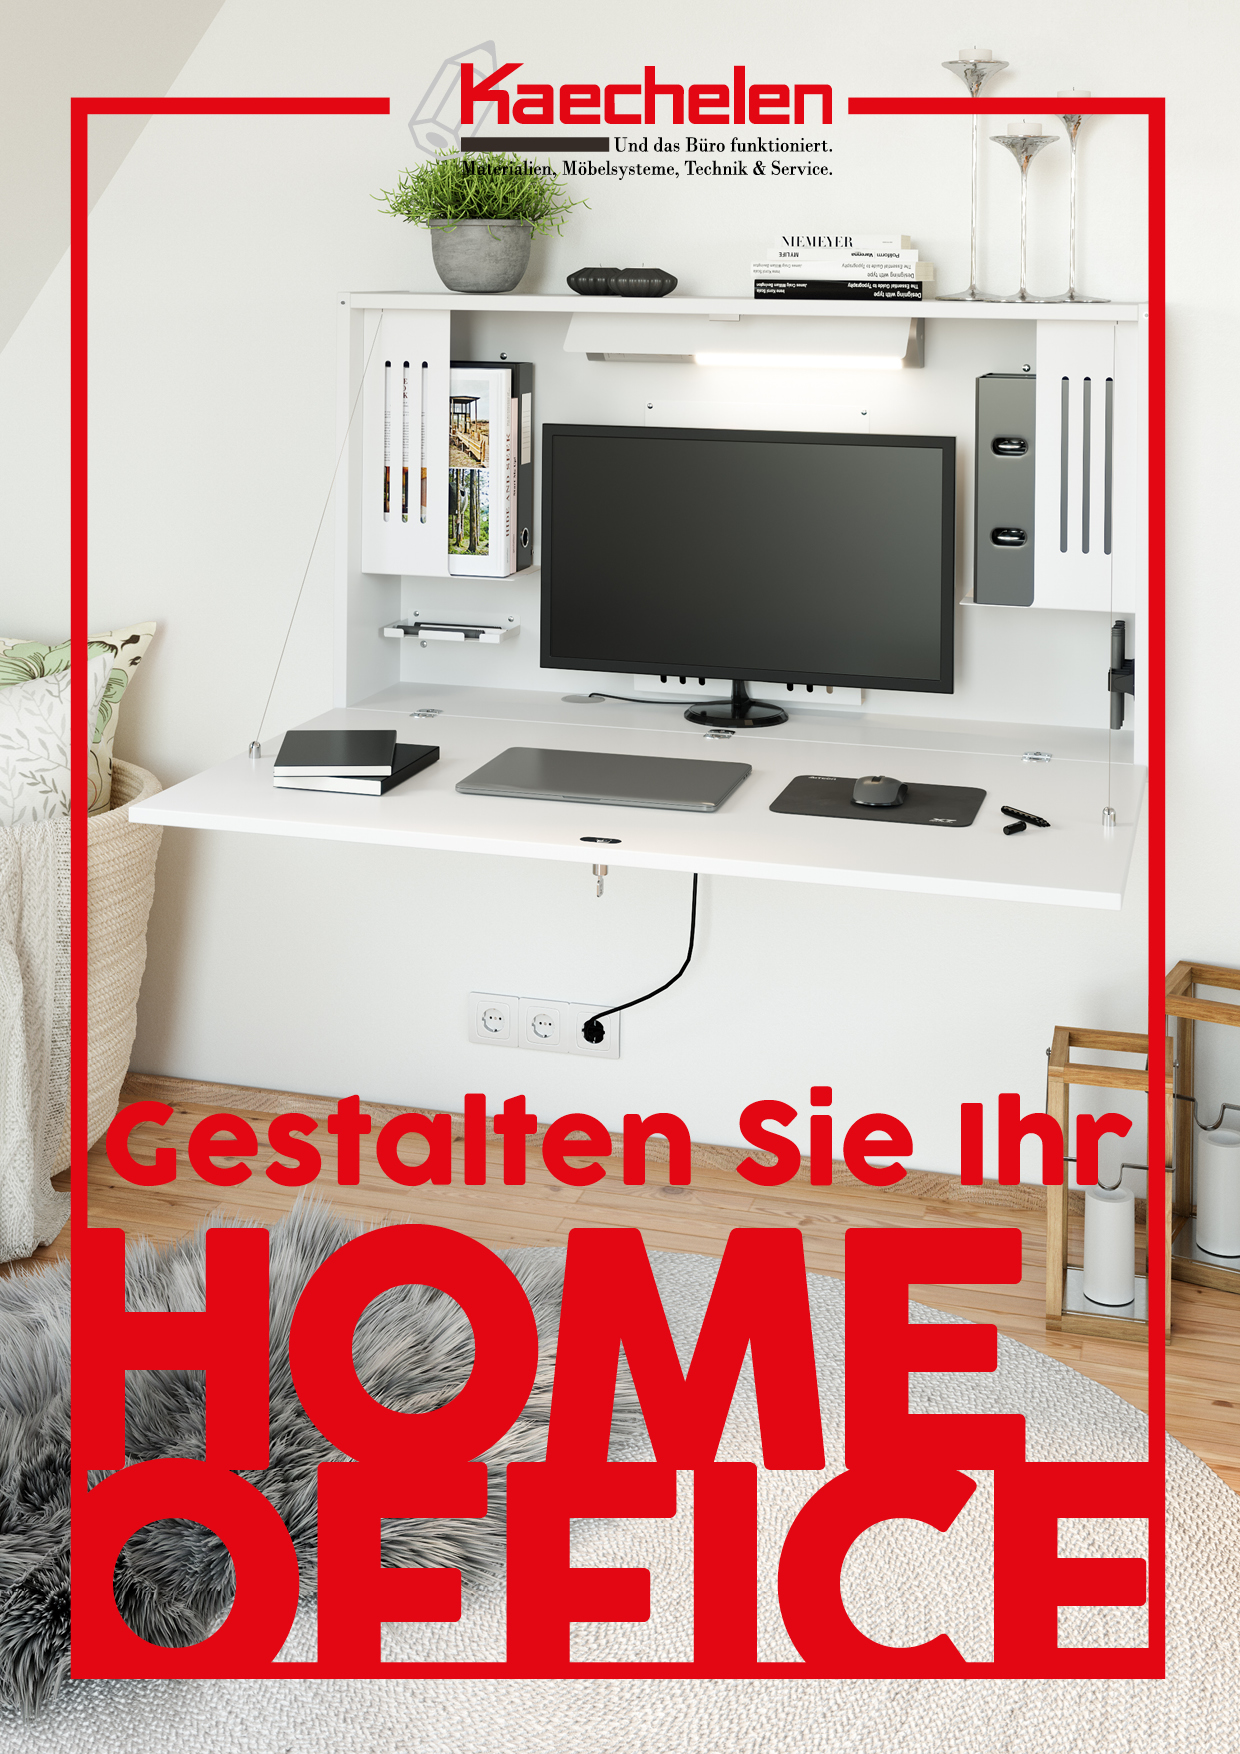 HomeOffice - Carl Kaechelen GmbH